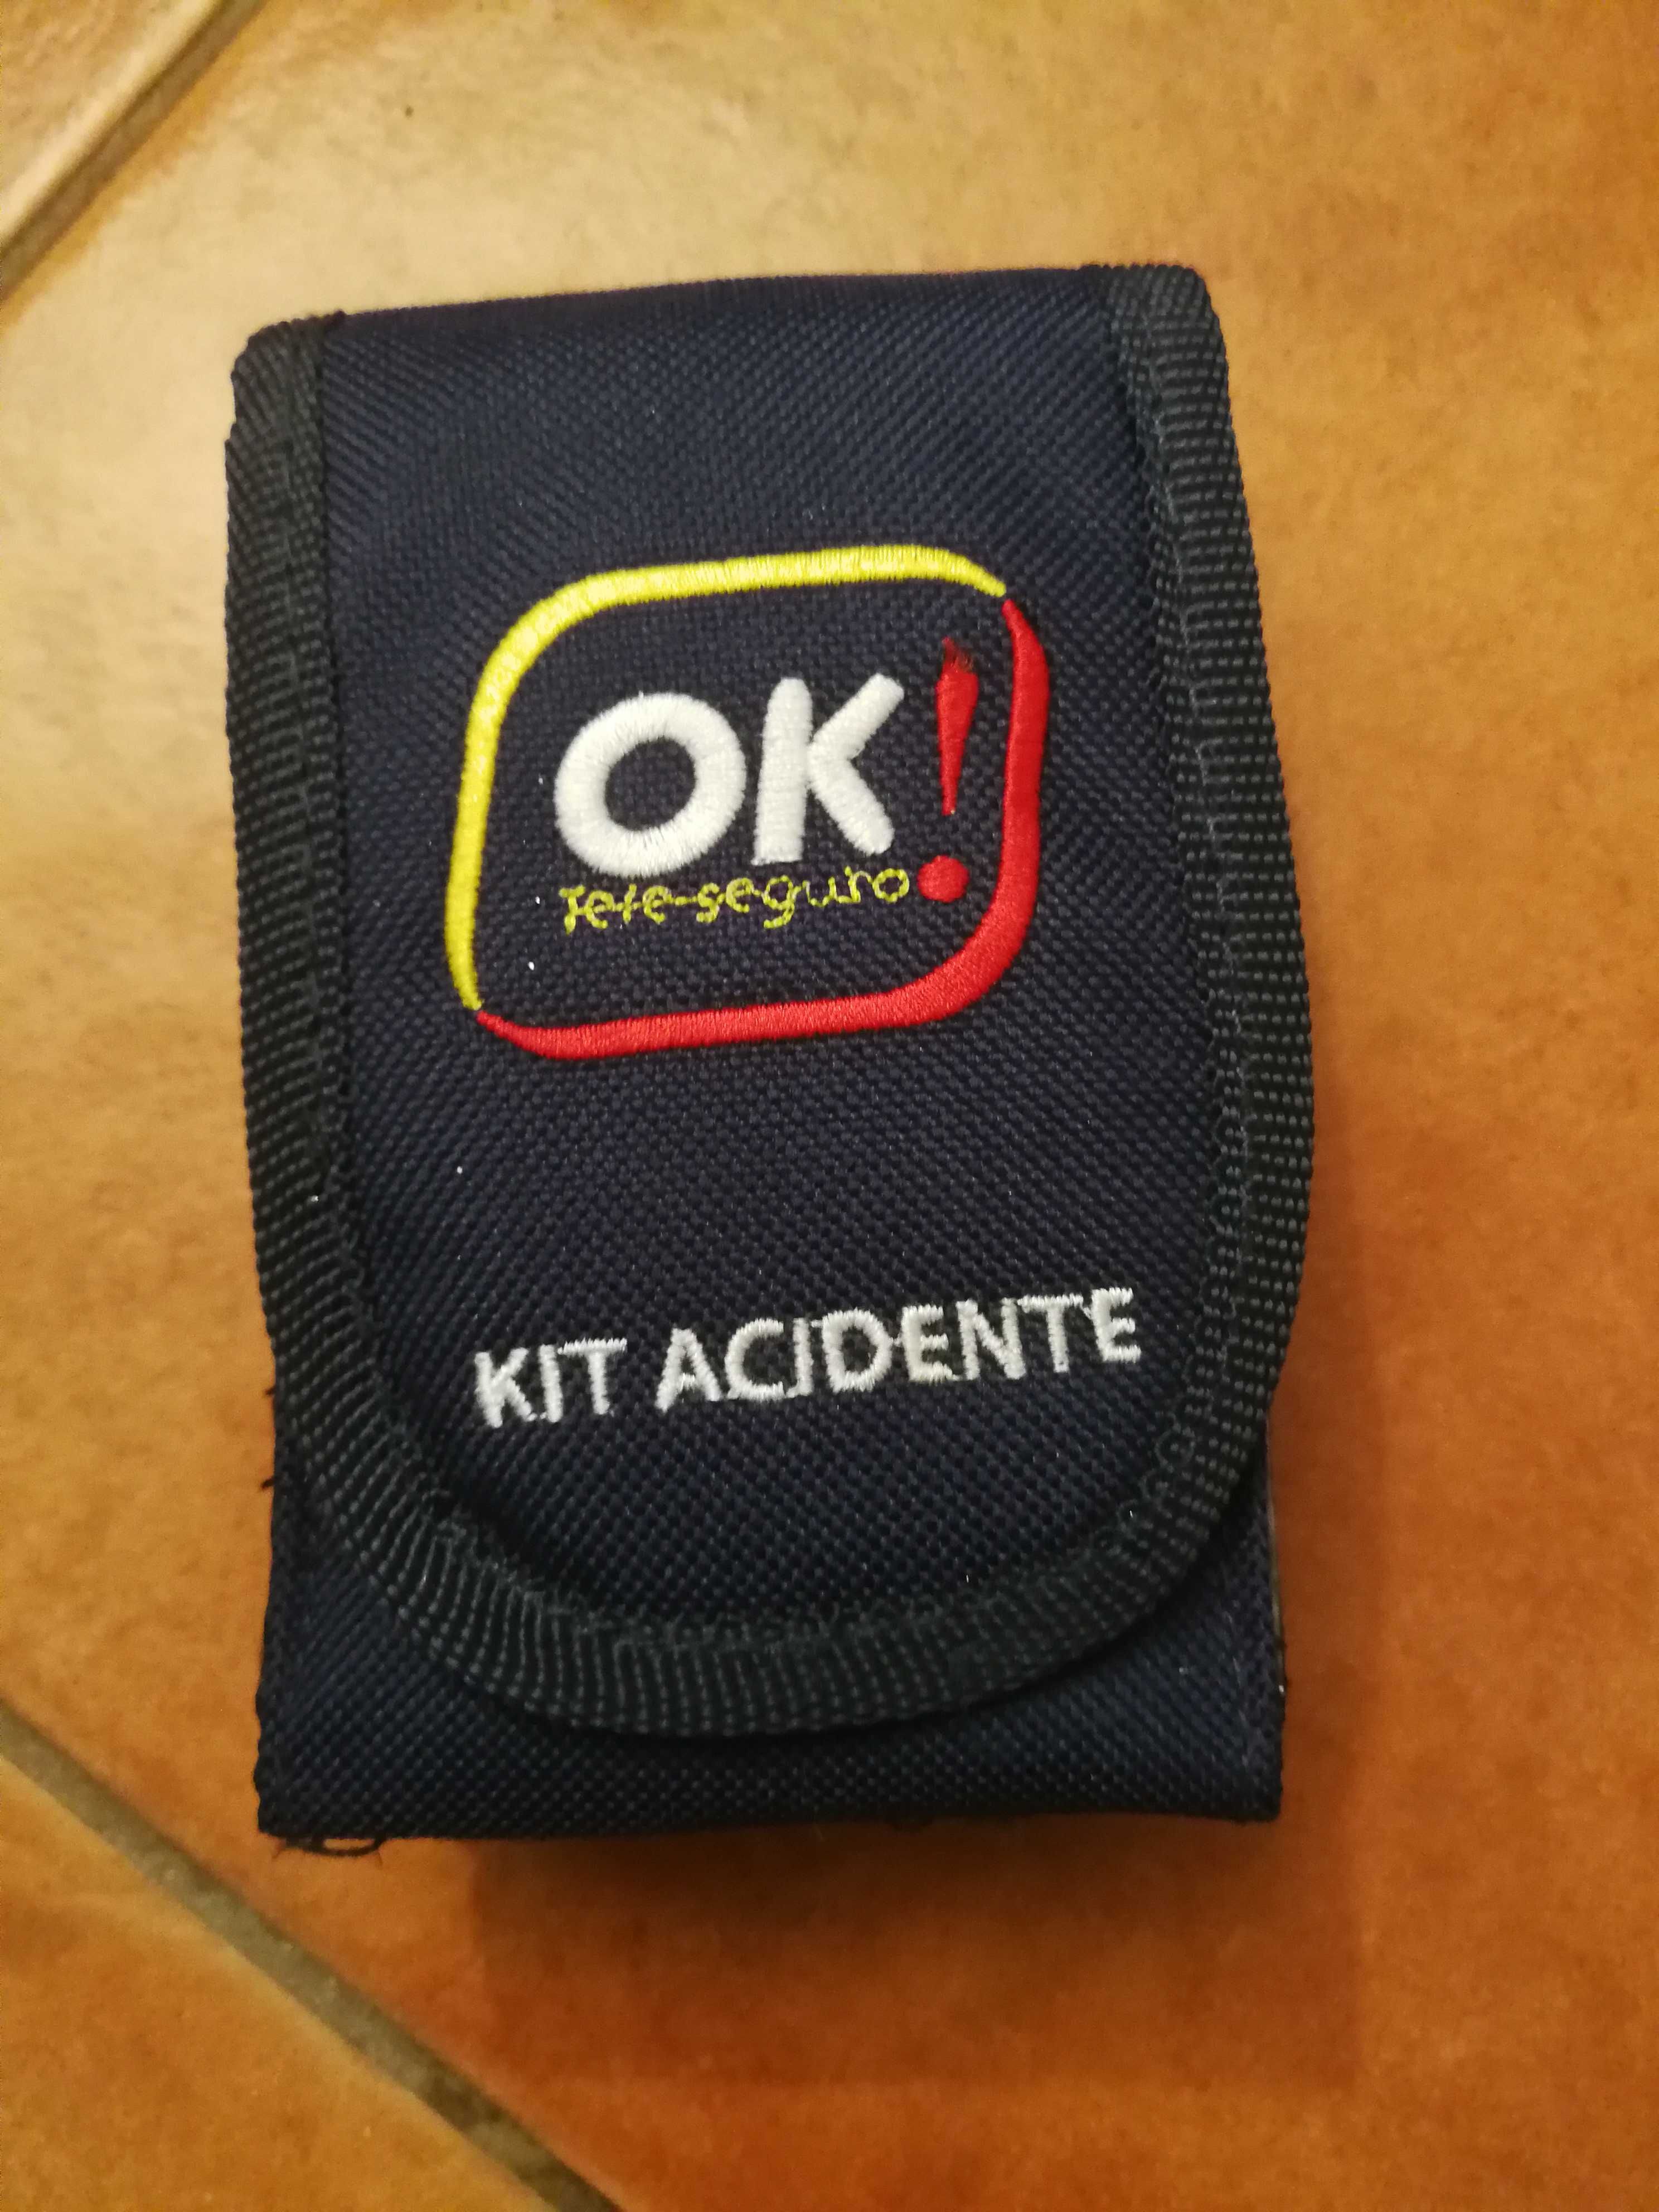 Kit acidente da OK! Tele-seguros